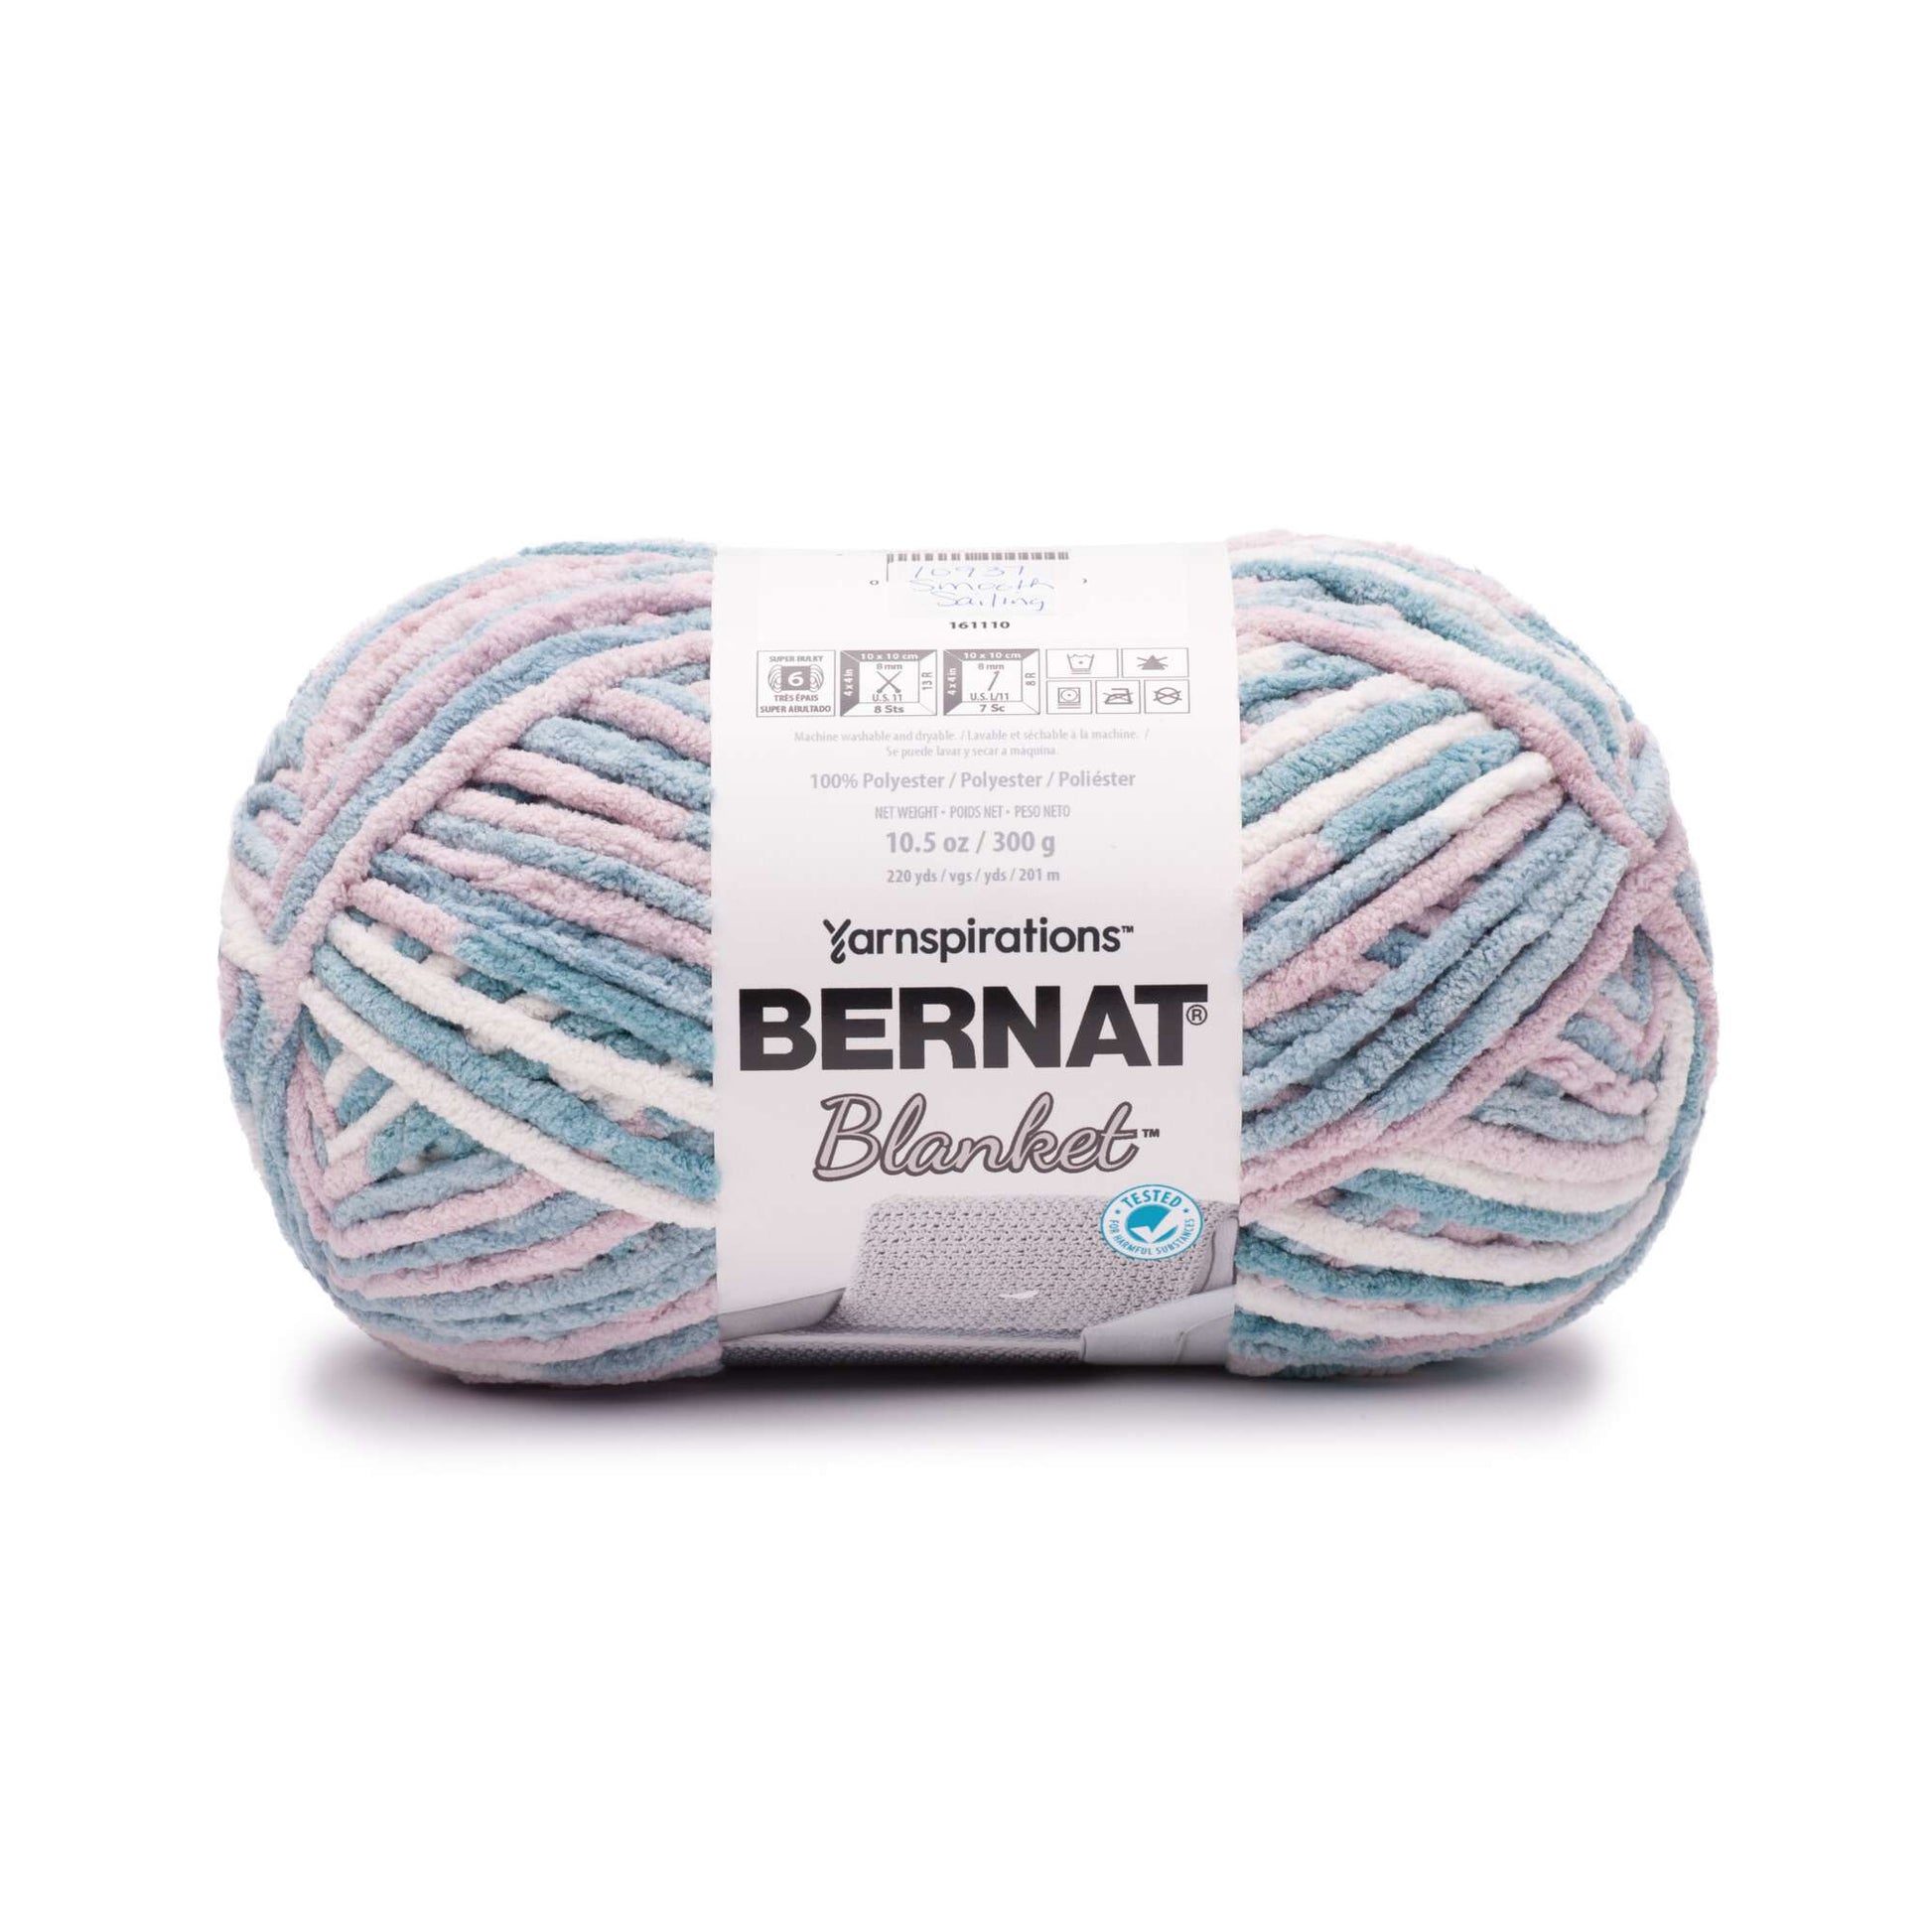 Bernat Blanket Yarn (300g/10.5oz) Smooth Sailing